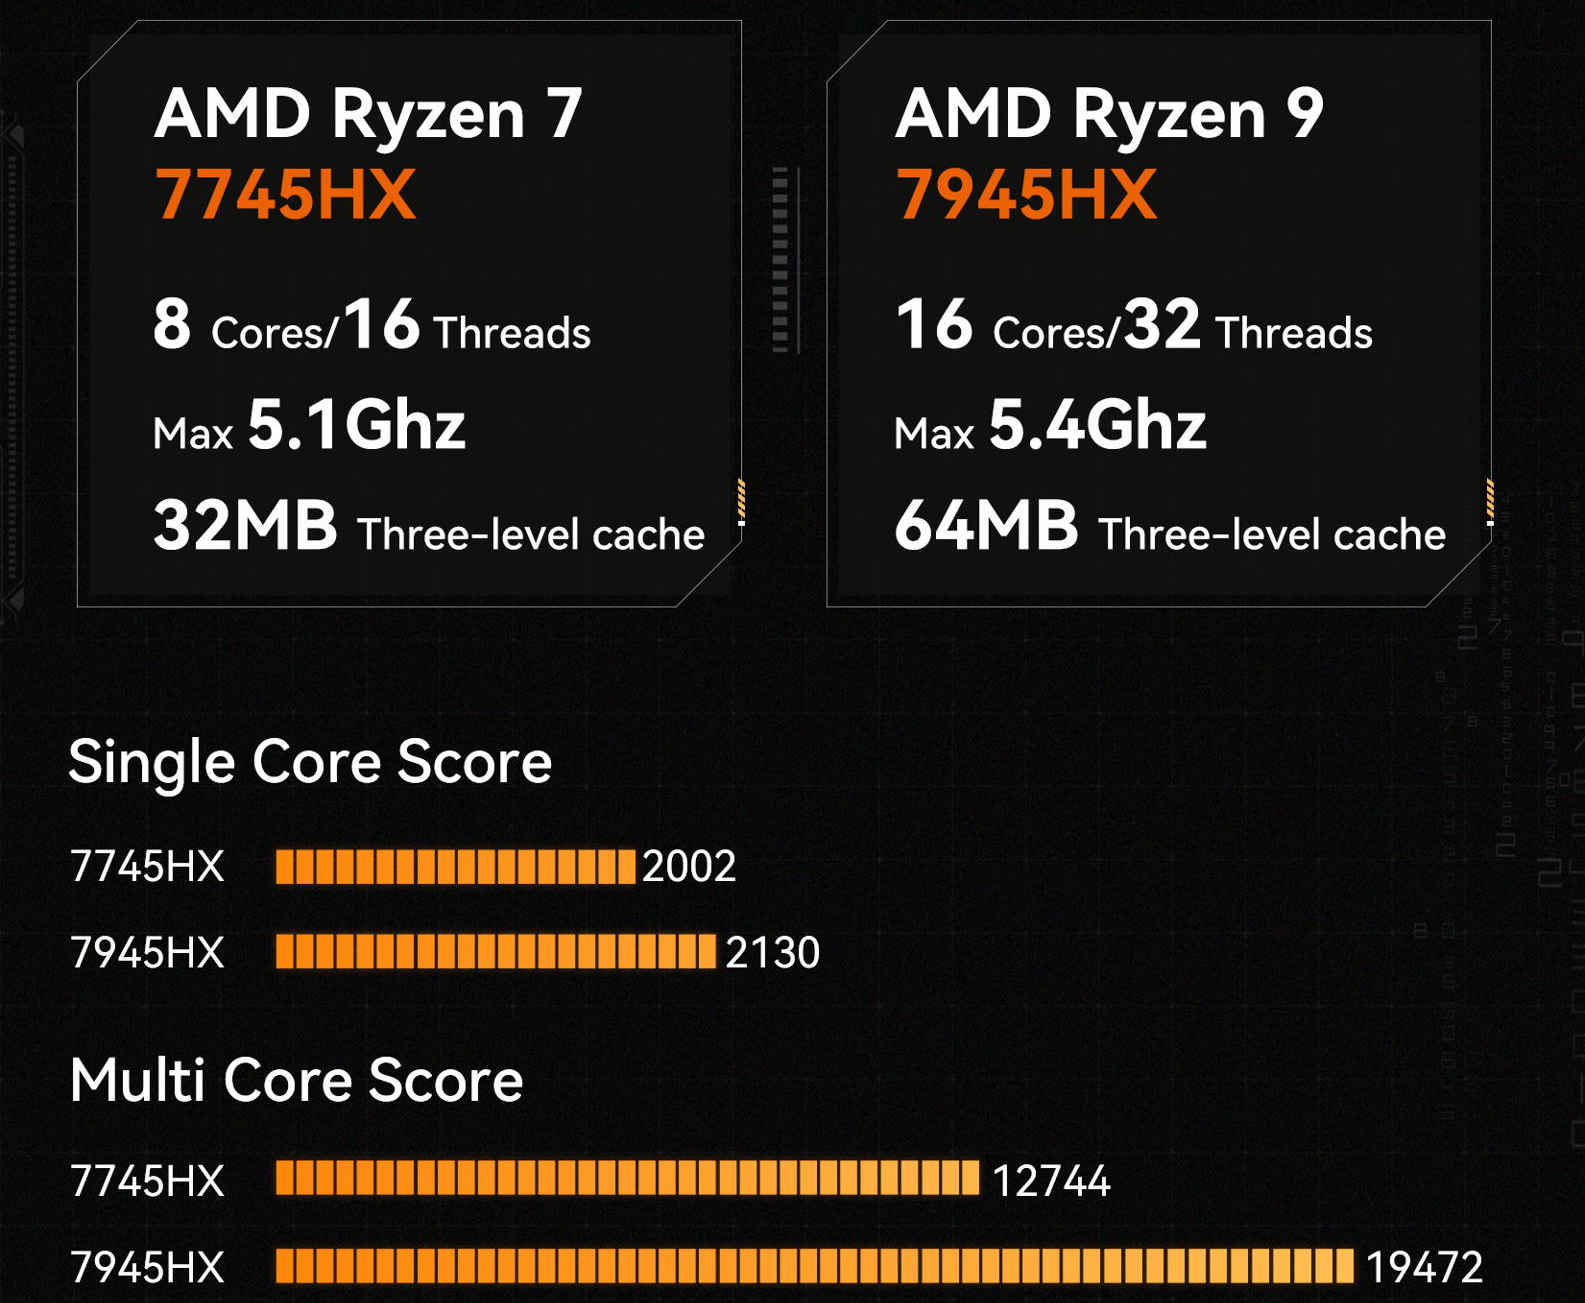 Minisforum BD770i motherboard with Ryzen 7 7745HX CPU costs $399 